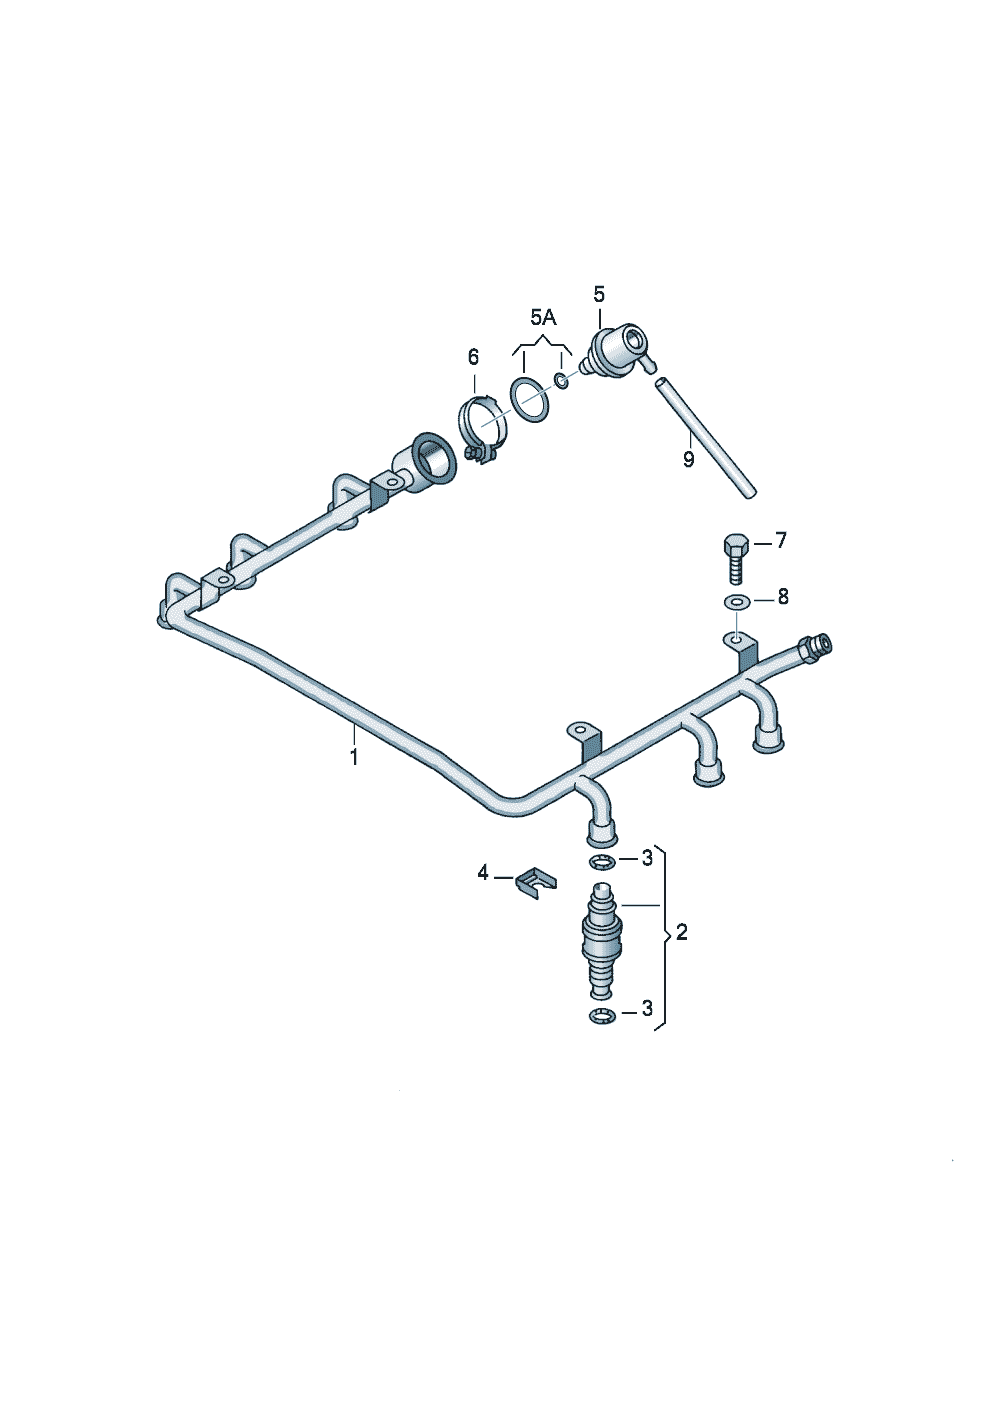 Injection valvepressure regulatorFuel line 2.6/2.8ltr. - Audi A6/Avant - a6